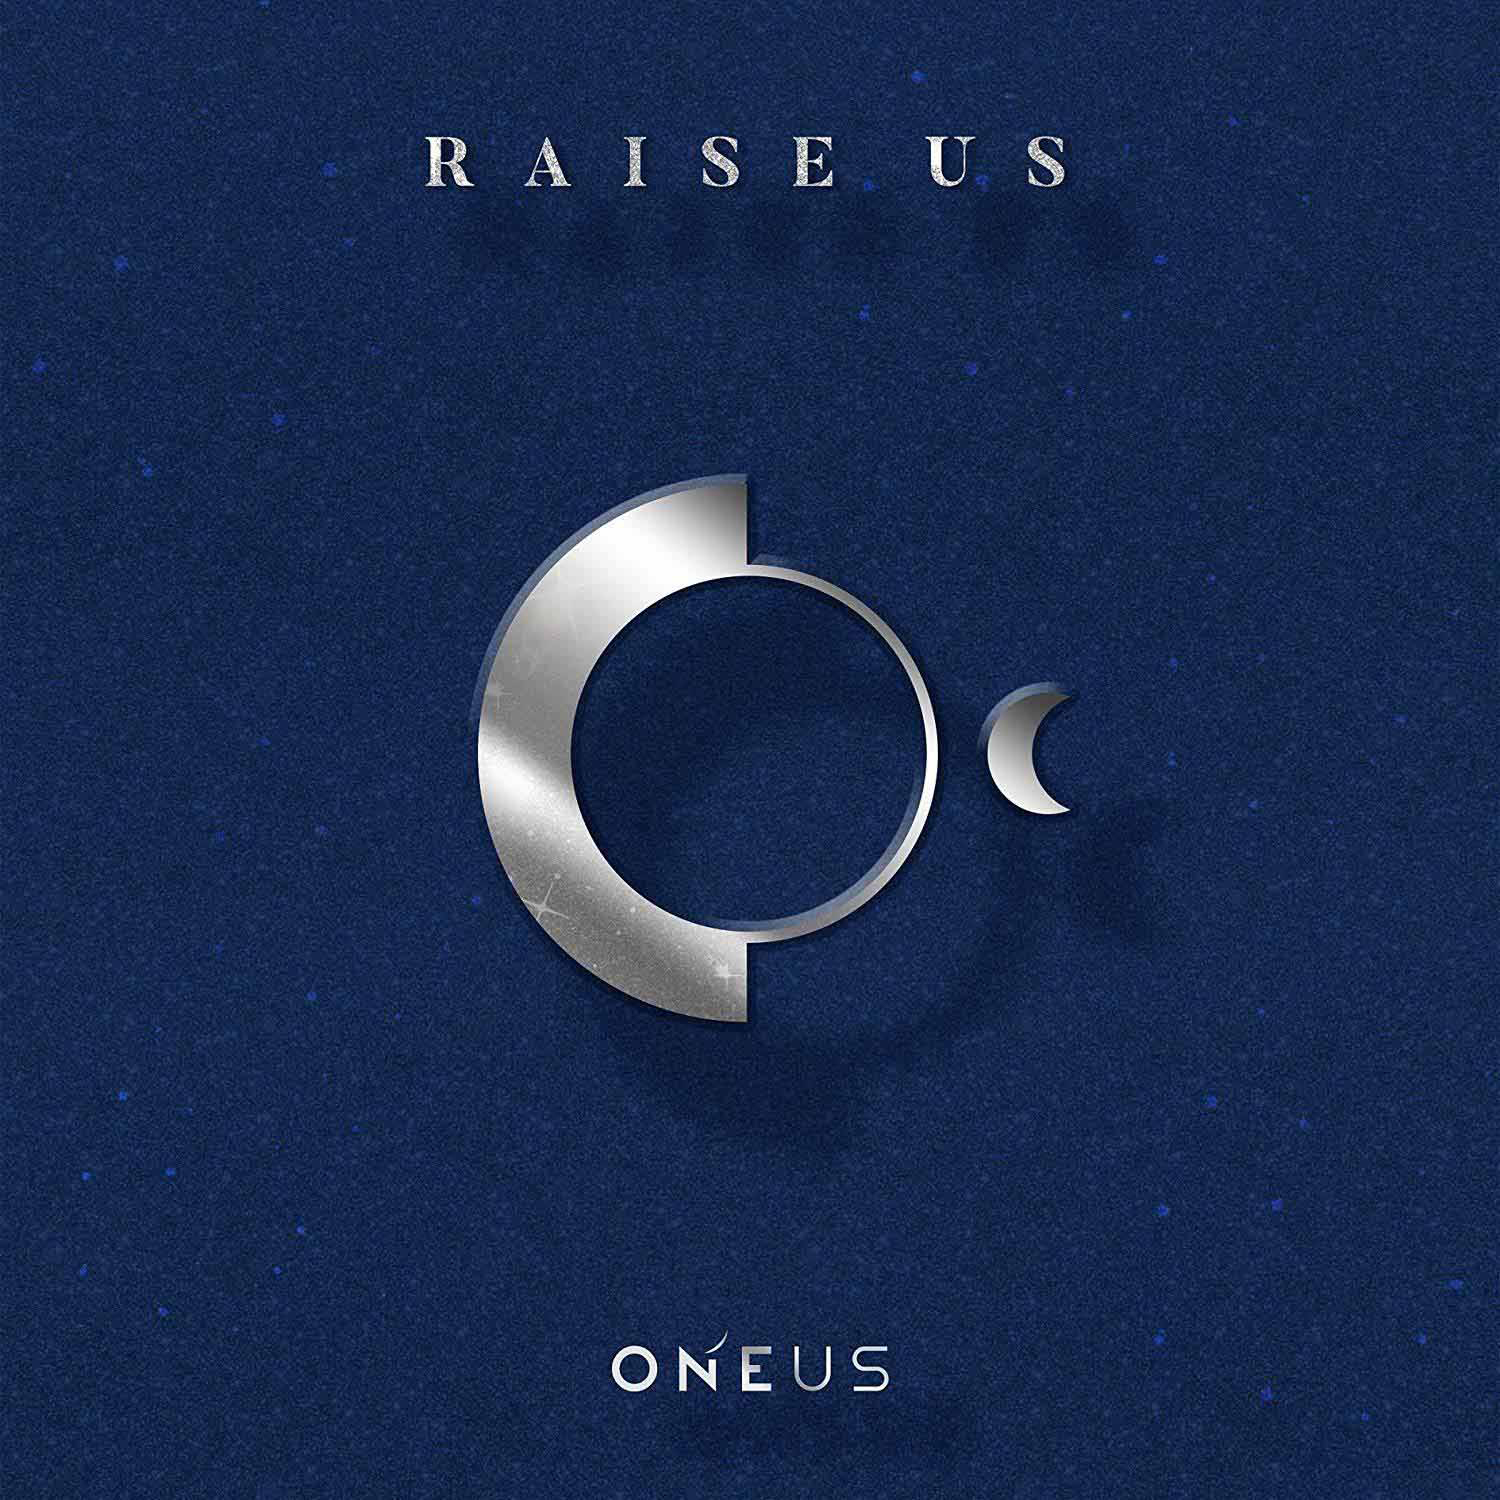 Oneus - Raise Us (Dawn (CD) - Version)